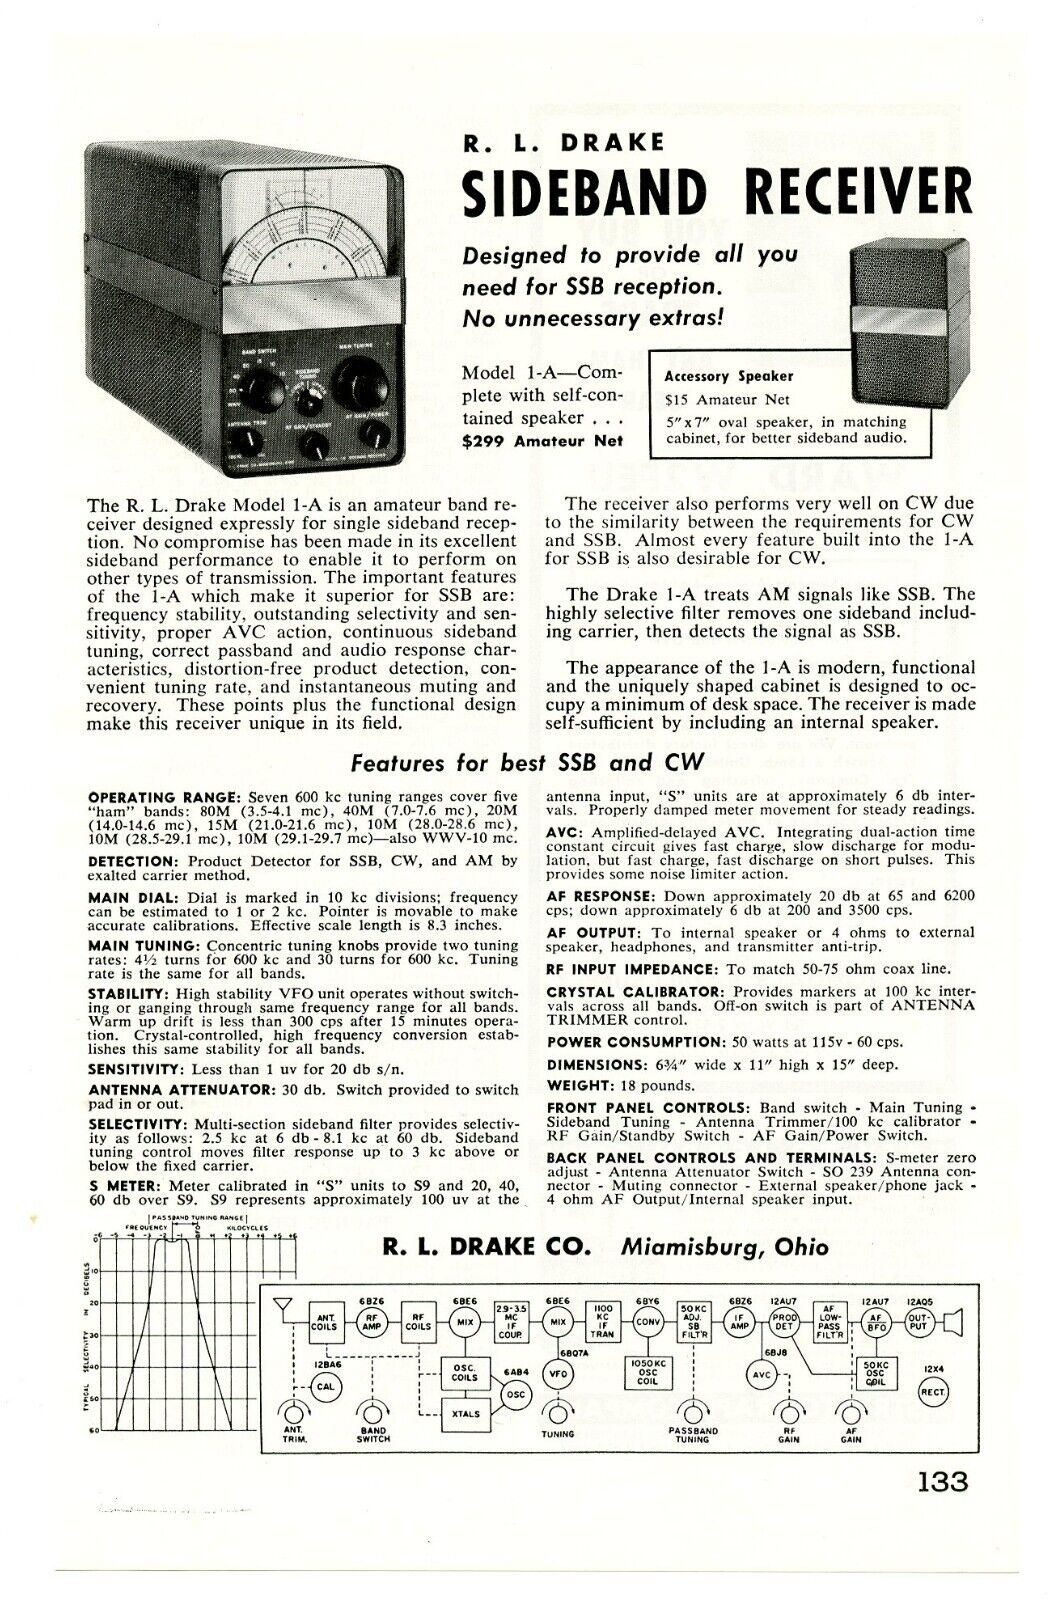 QST Ham Radio Mag. Ad R.L. DRAKE SIDEBAND RECEIVER Model 1-A (1/59)